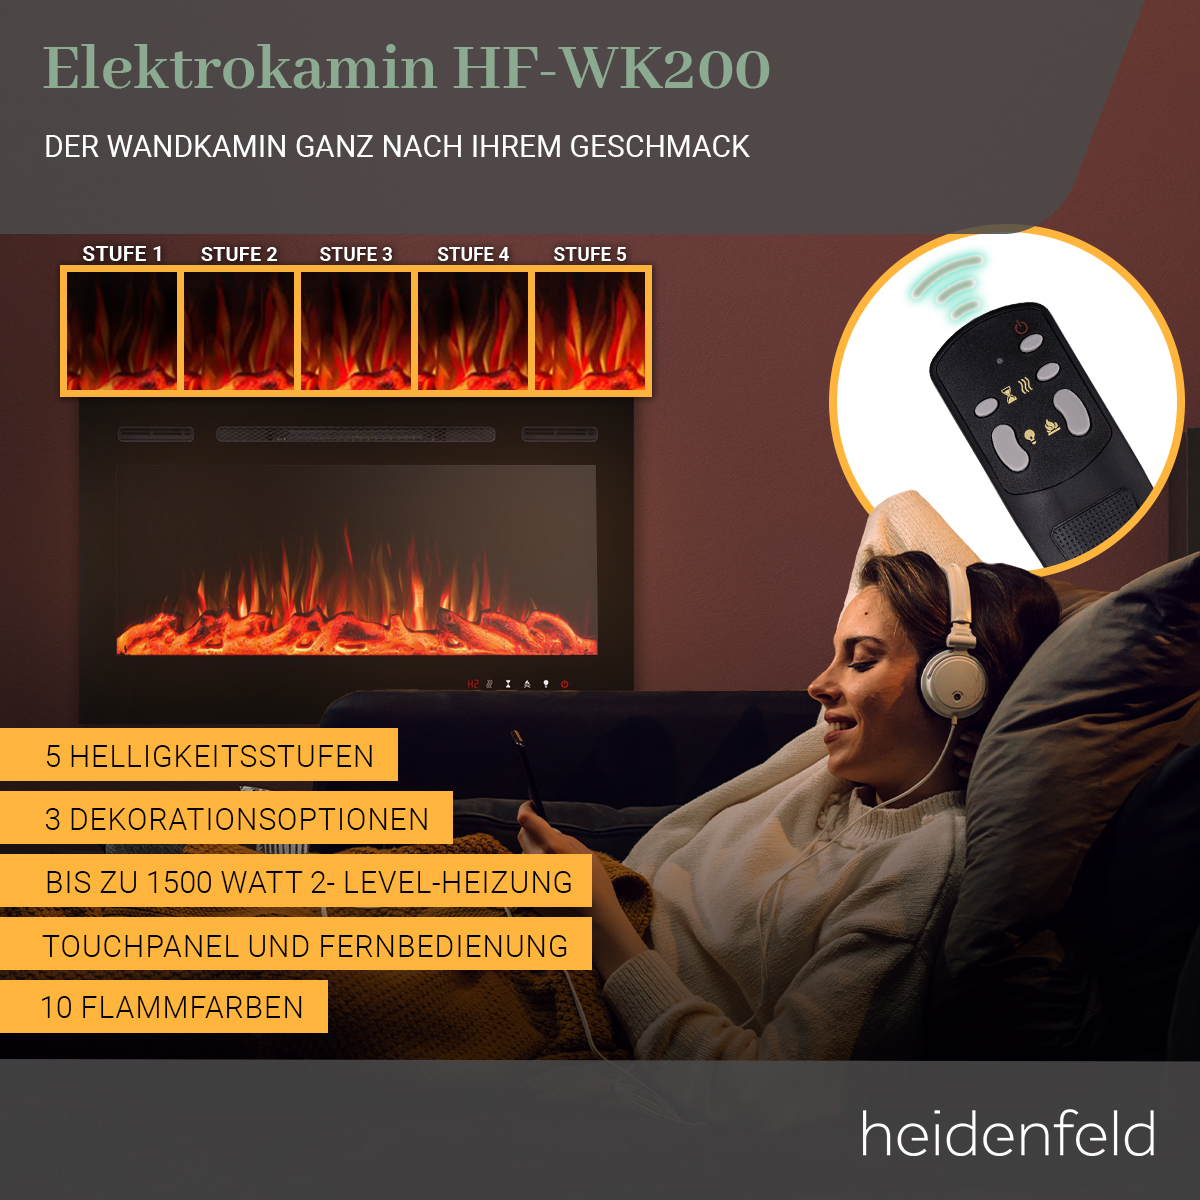 36 (1500 HEIDENFELD Elektrokamin Zoll Wandkamin HF-WK200 Watt)